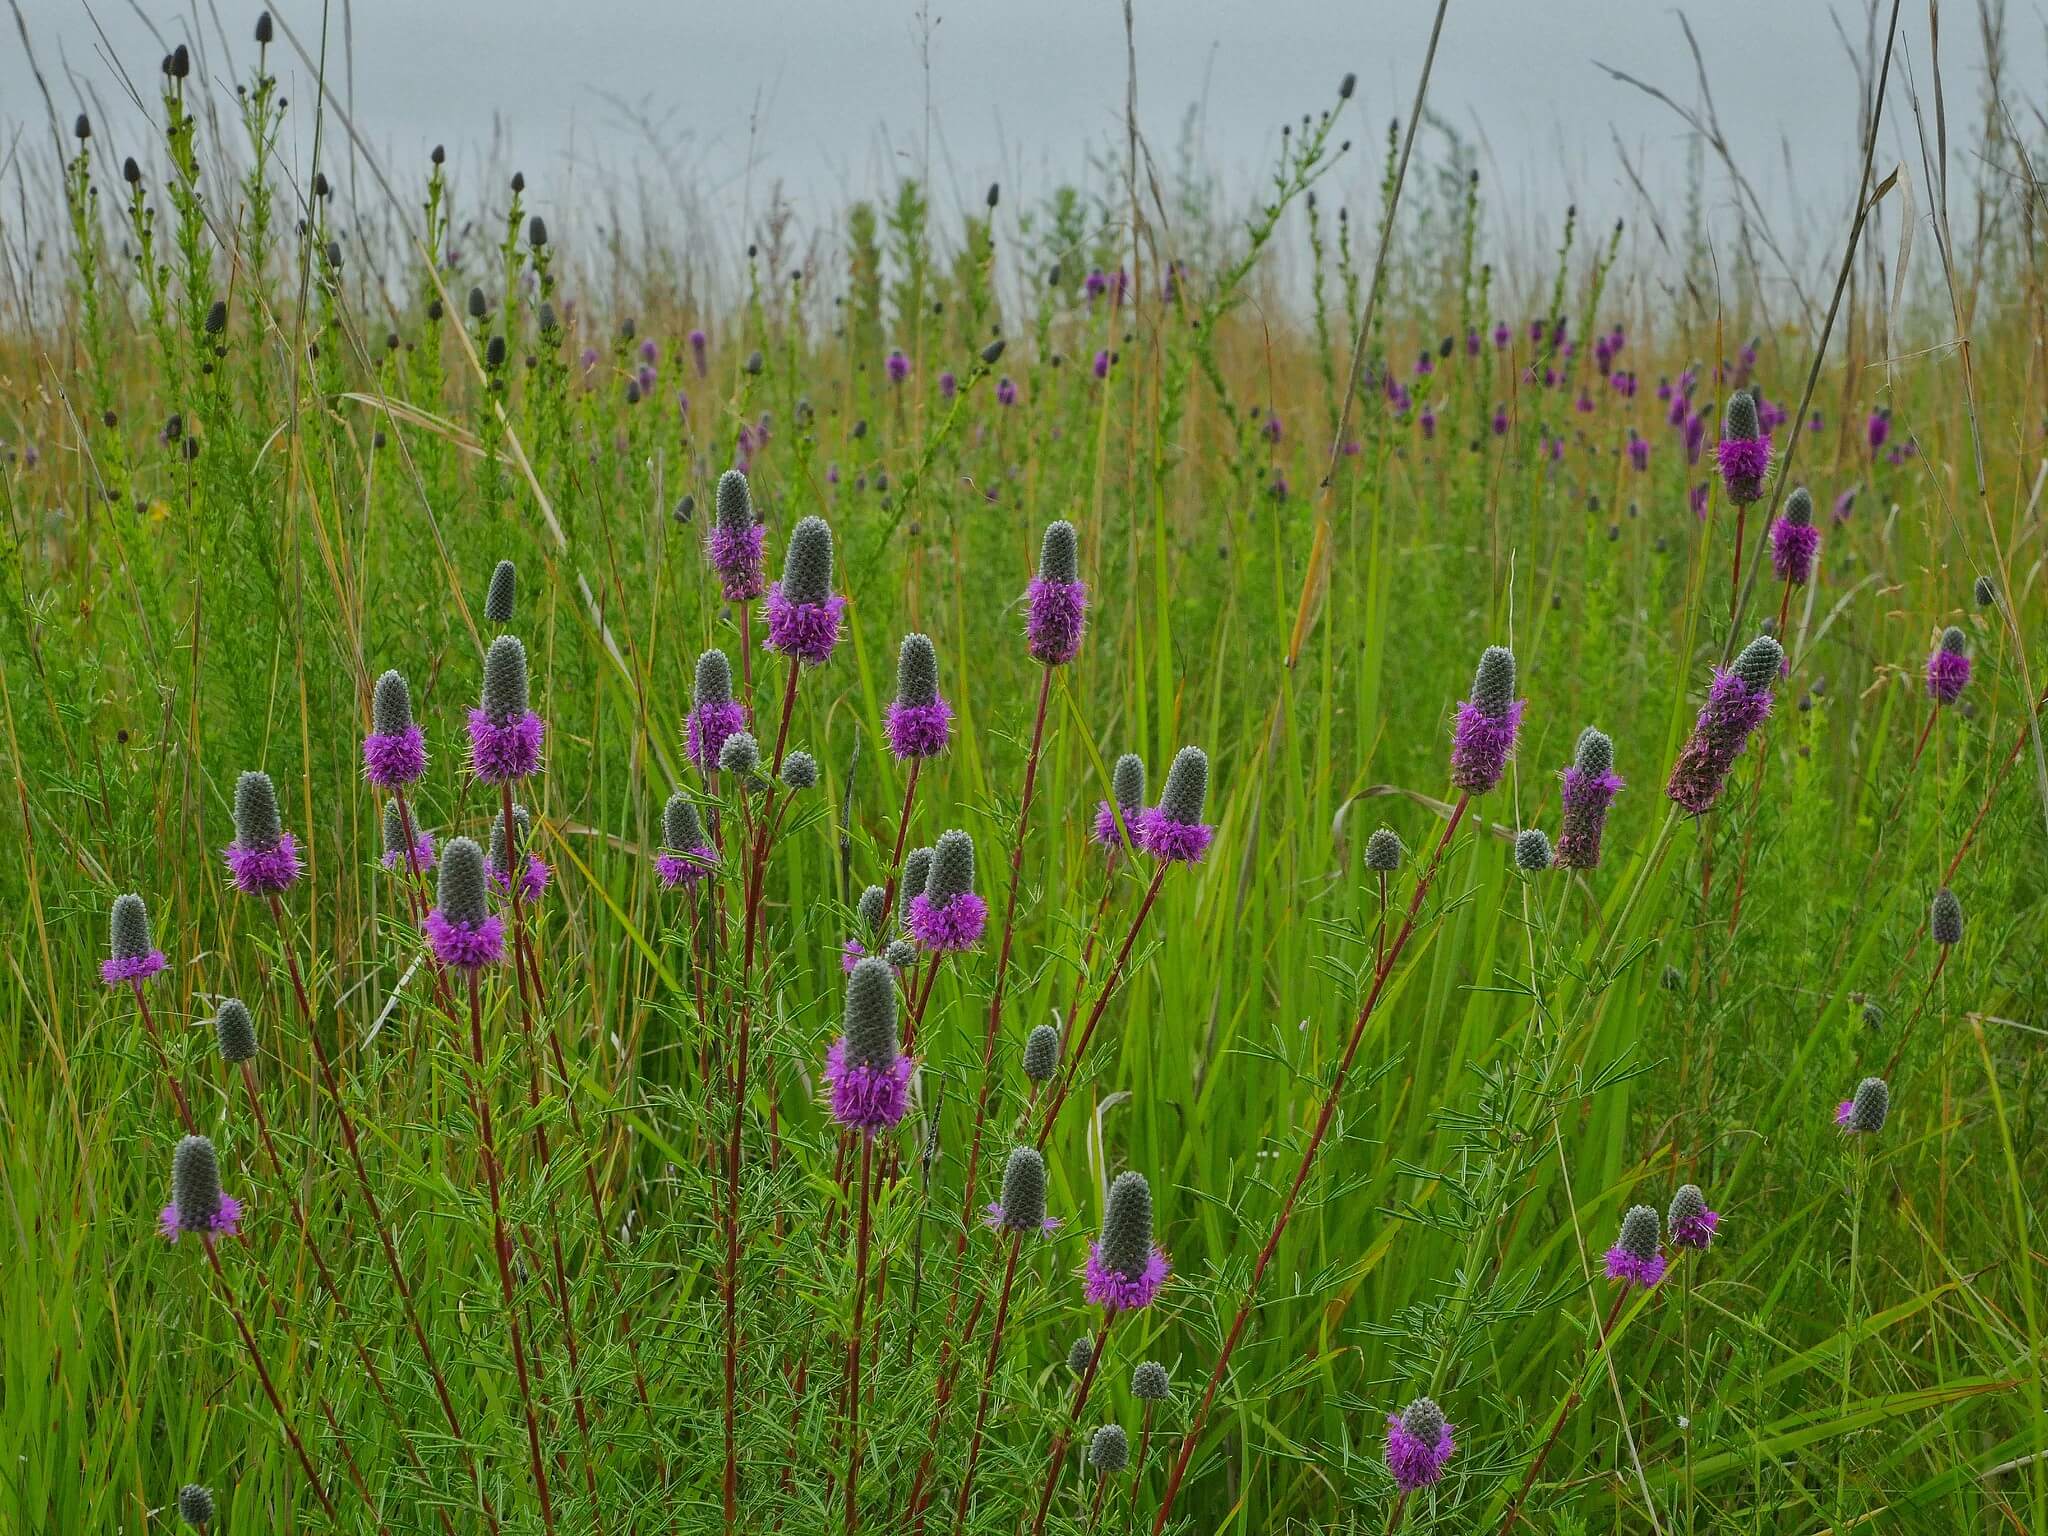 Purple prairie clover in a green field.